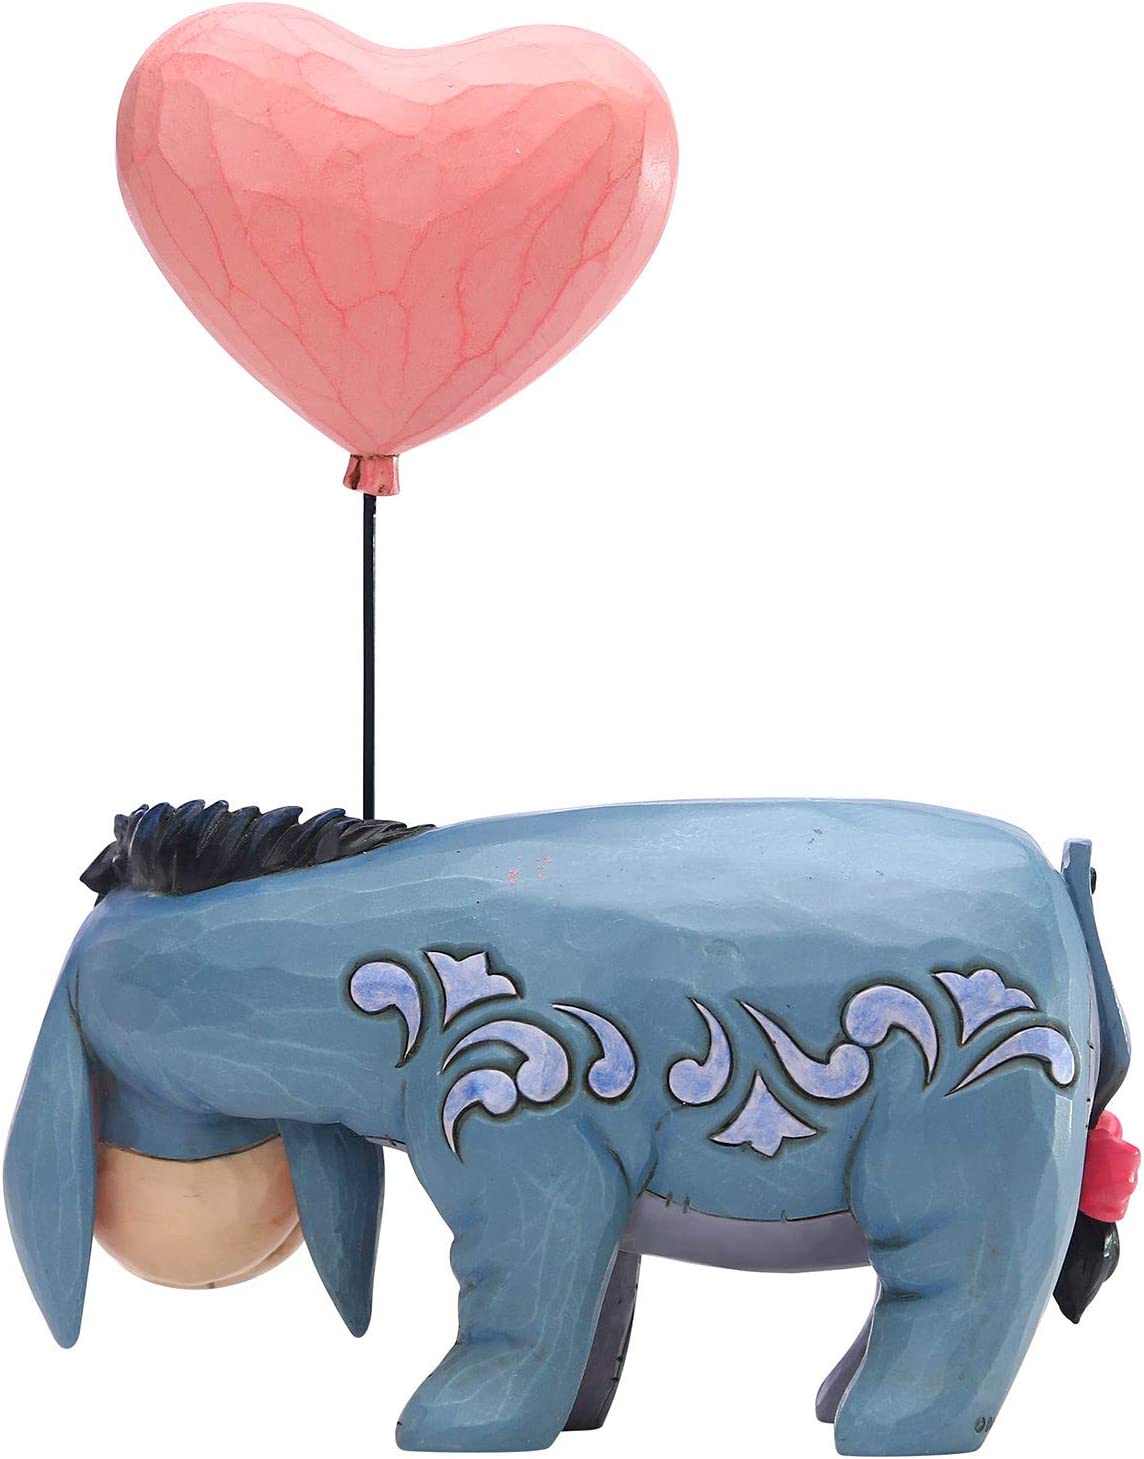 Eeyore with heart balloon figurine - Disney